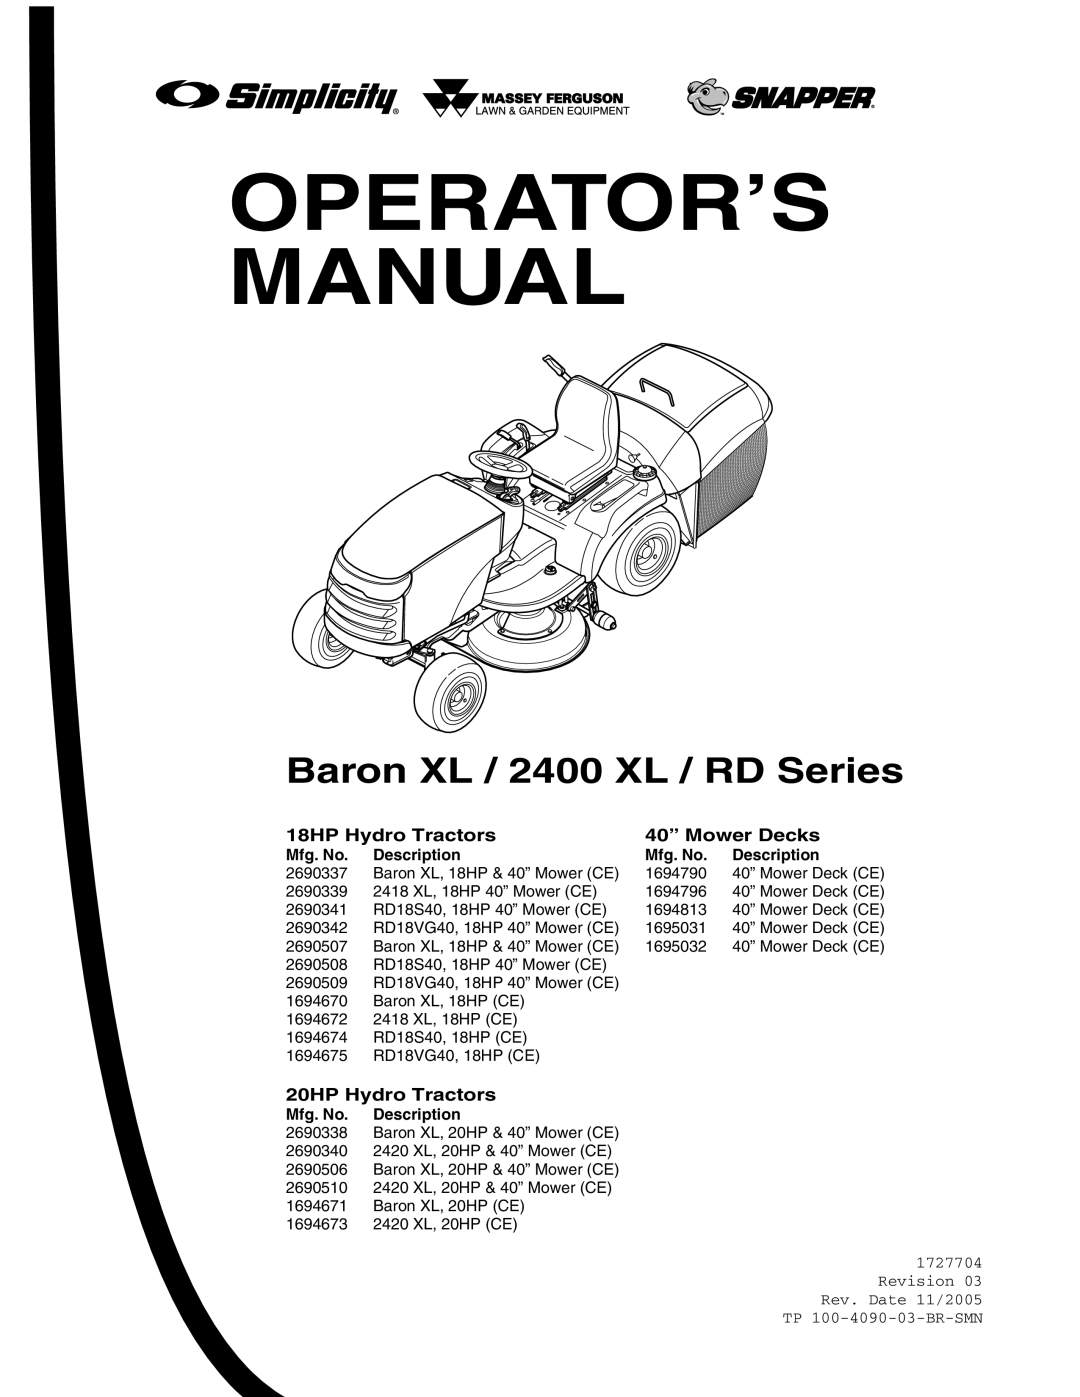 Snapper XL Series manual Operator’S Manual, Baron XL / 2400 XL / RD Series, Mfg. No, Description 